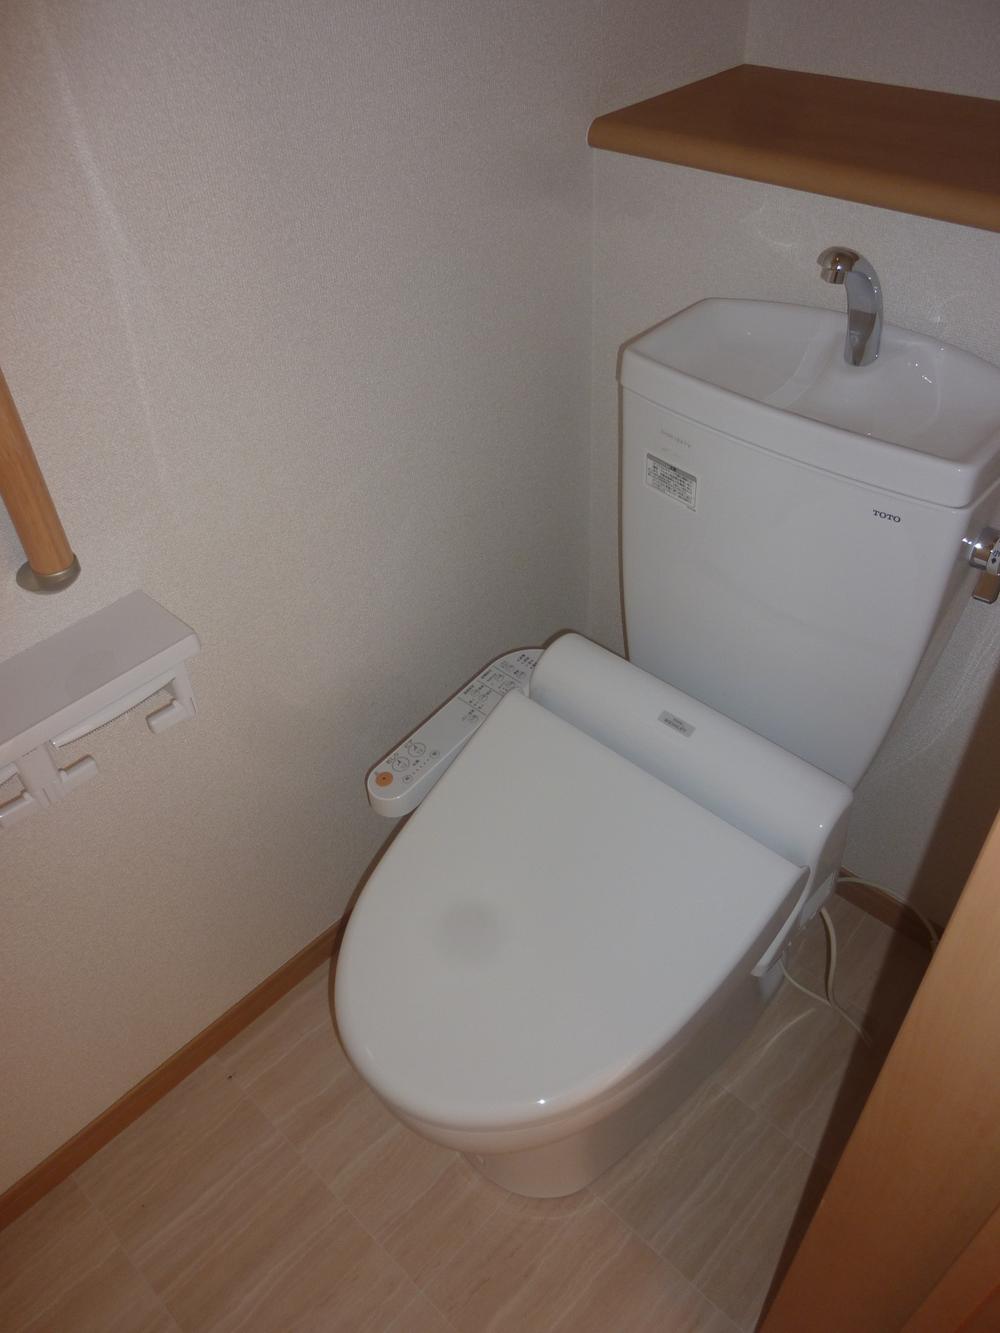 Toilet. Seller enforcement example